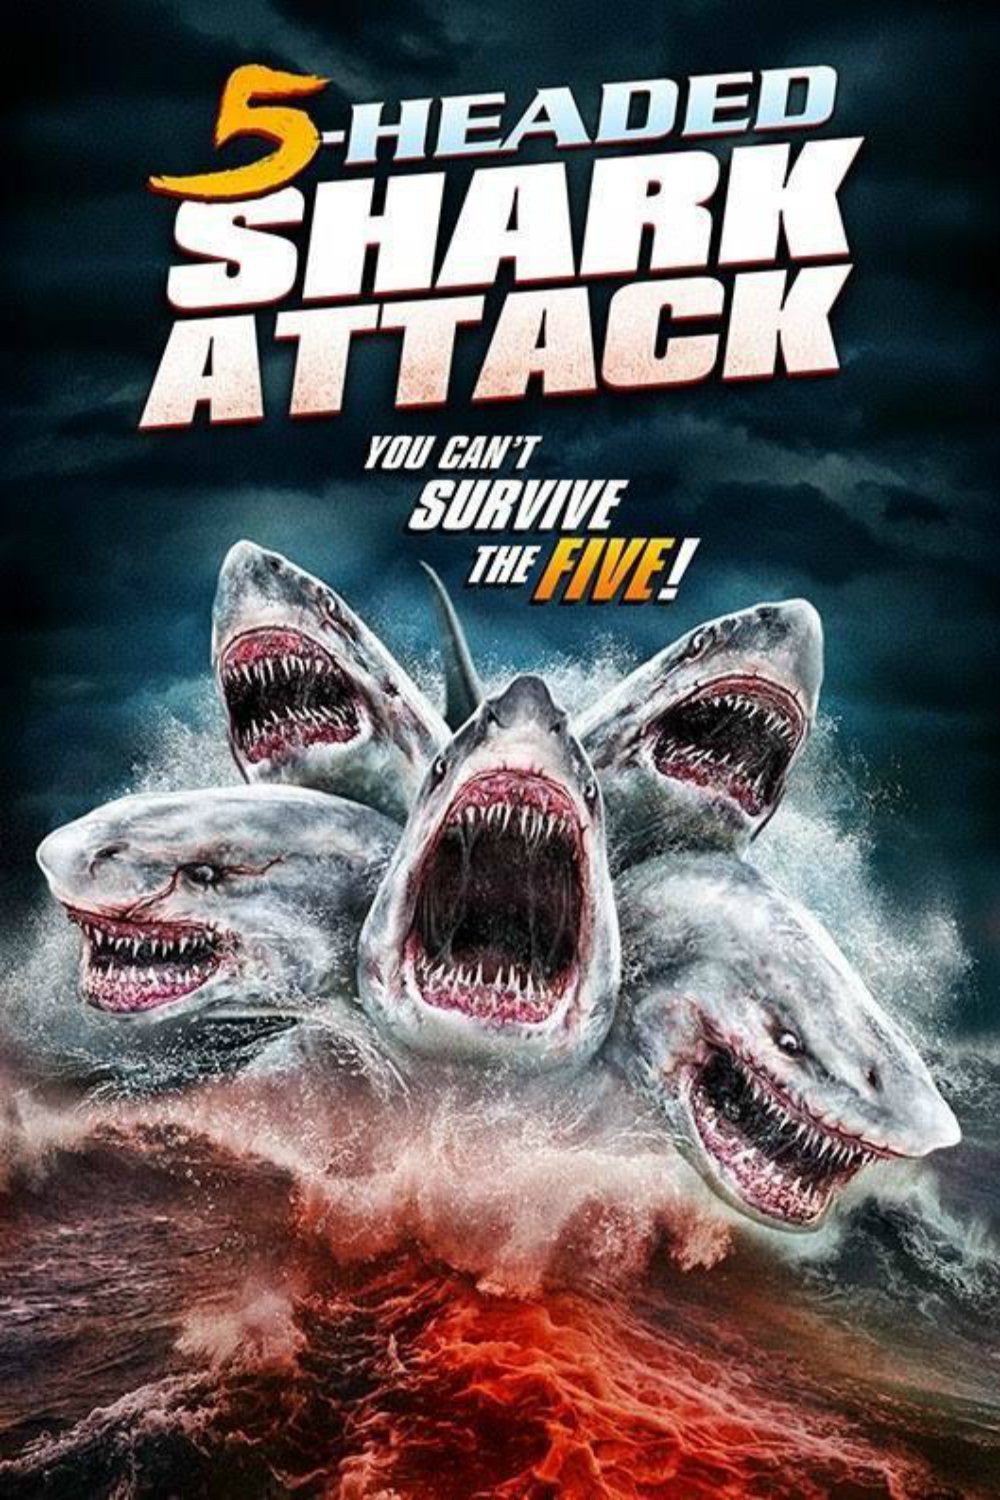 Plakat von "5-Headed Shark Attack"